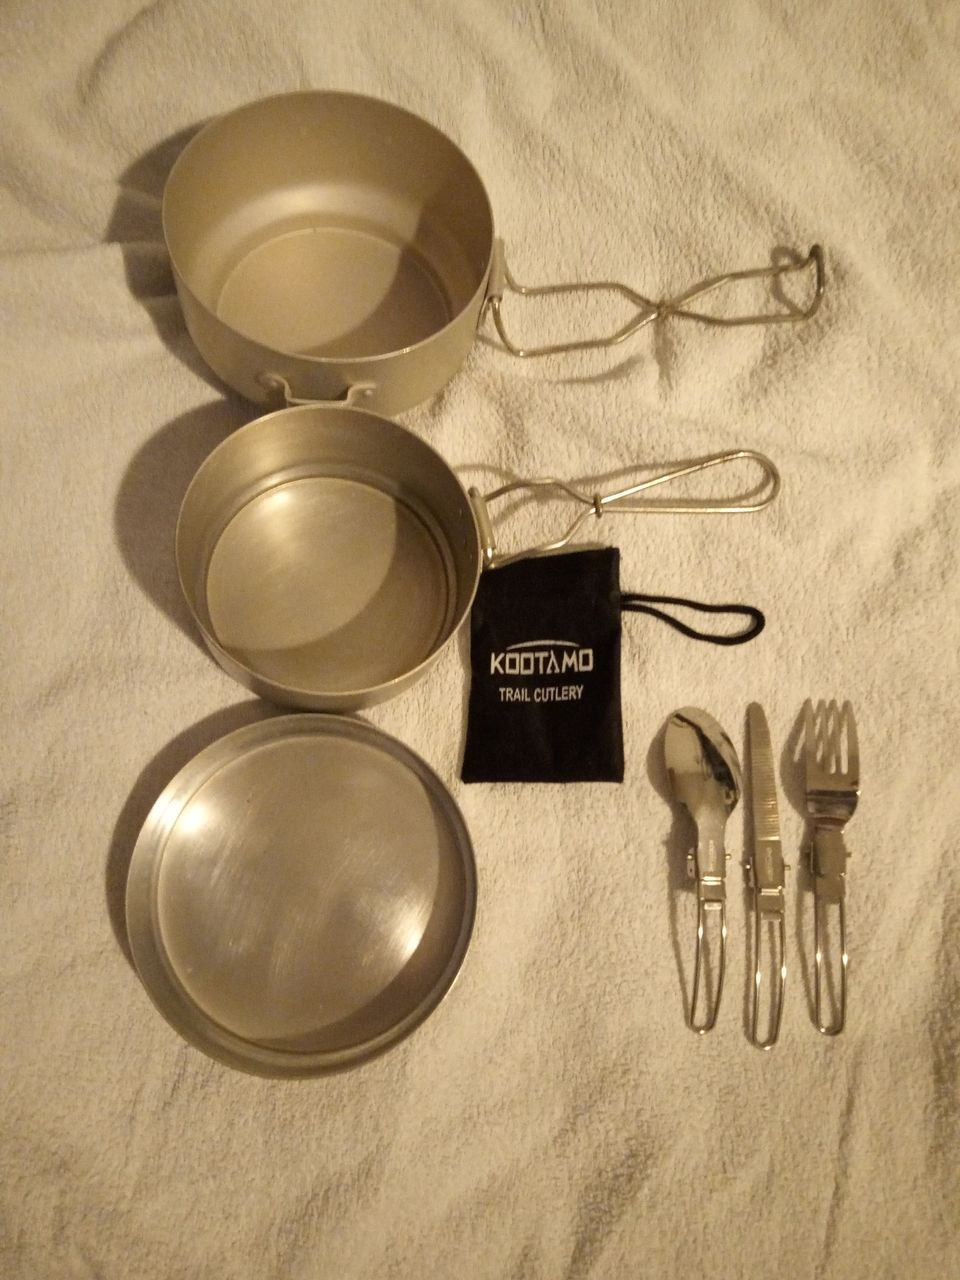 Retki kattilat+ Kootamo trail cutlery